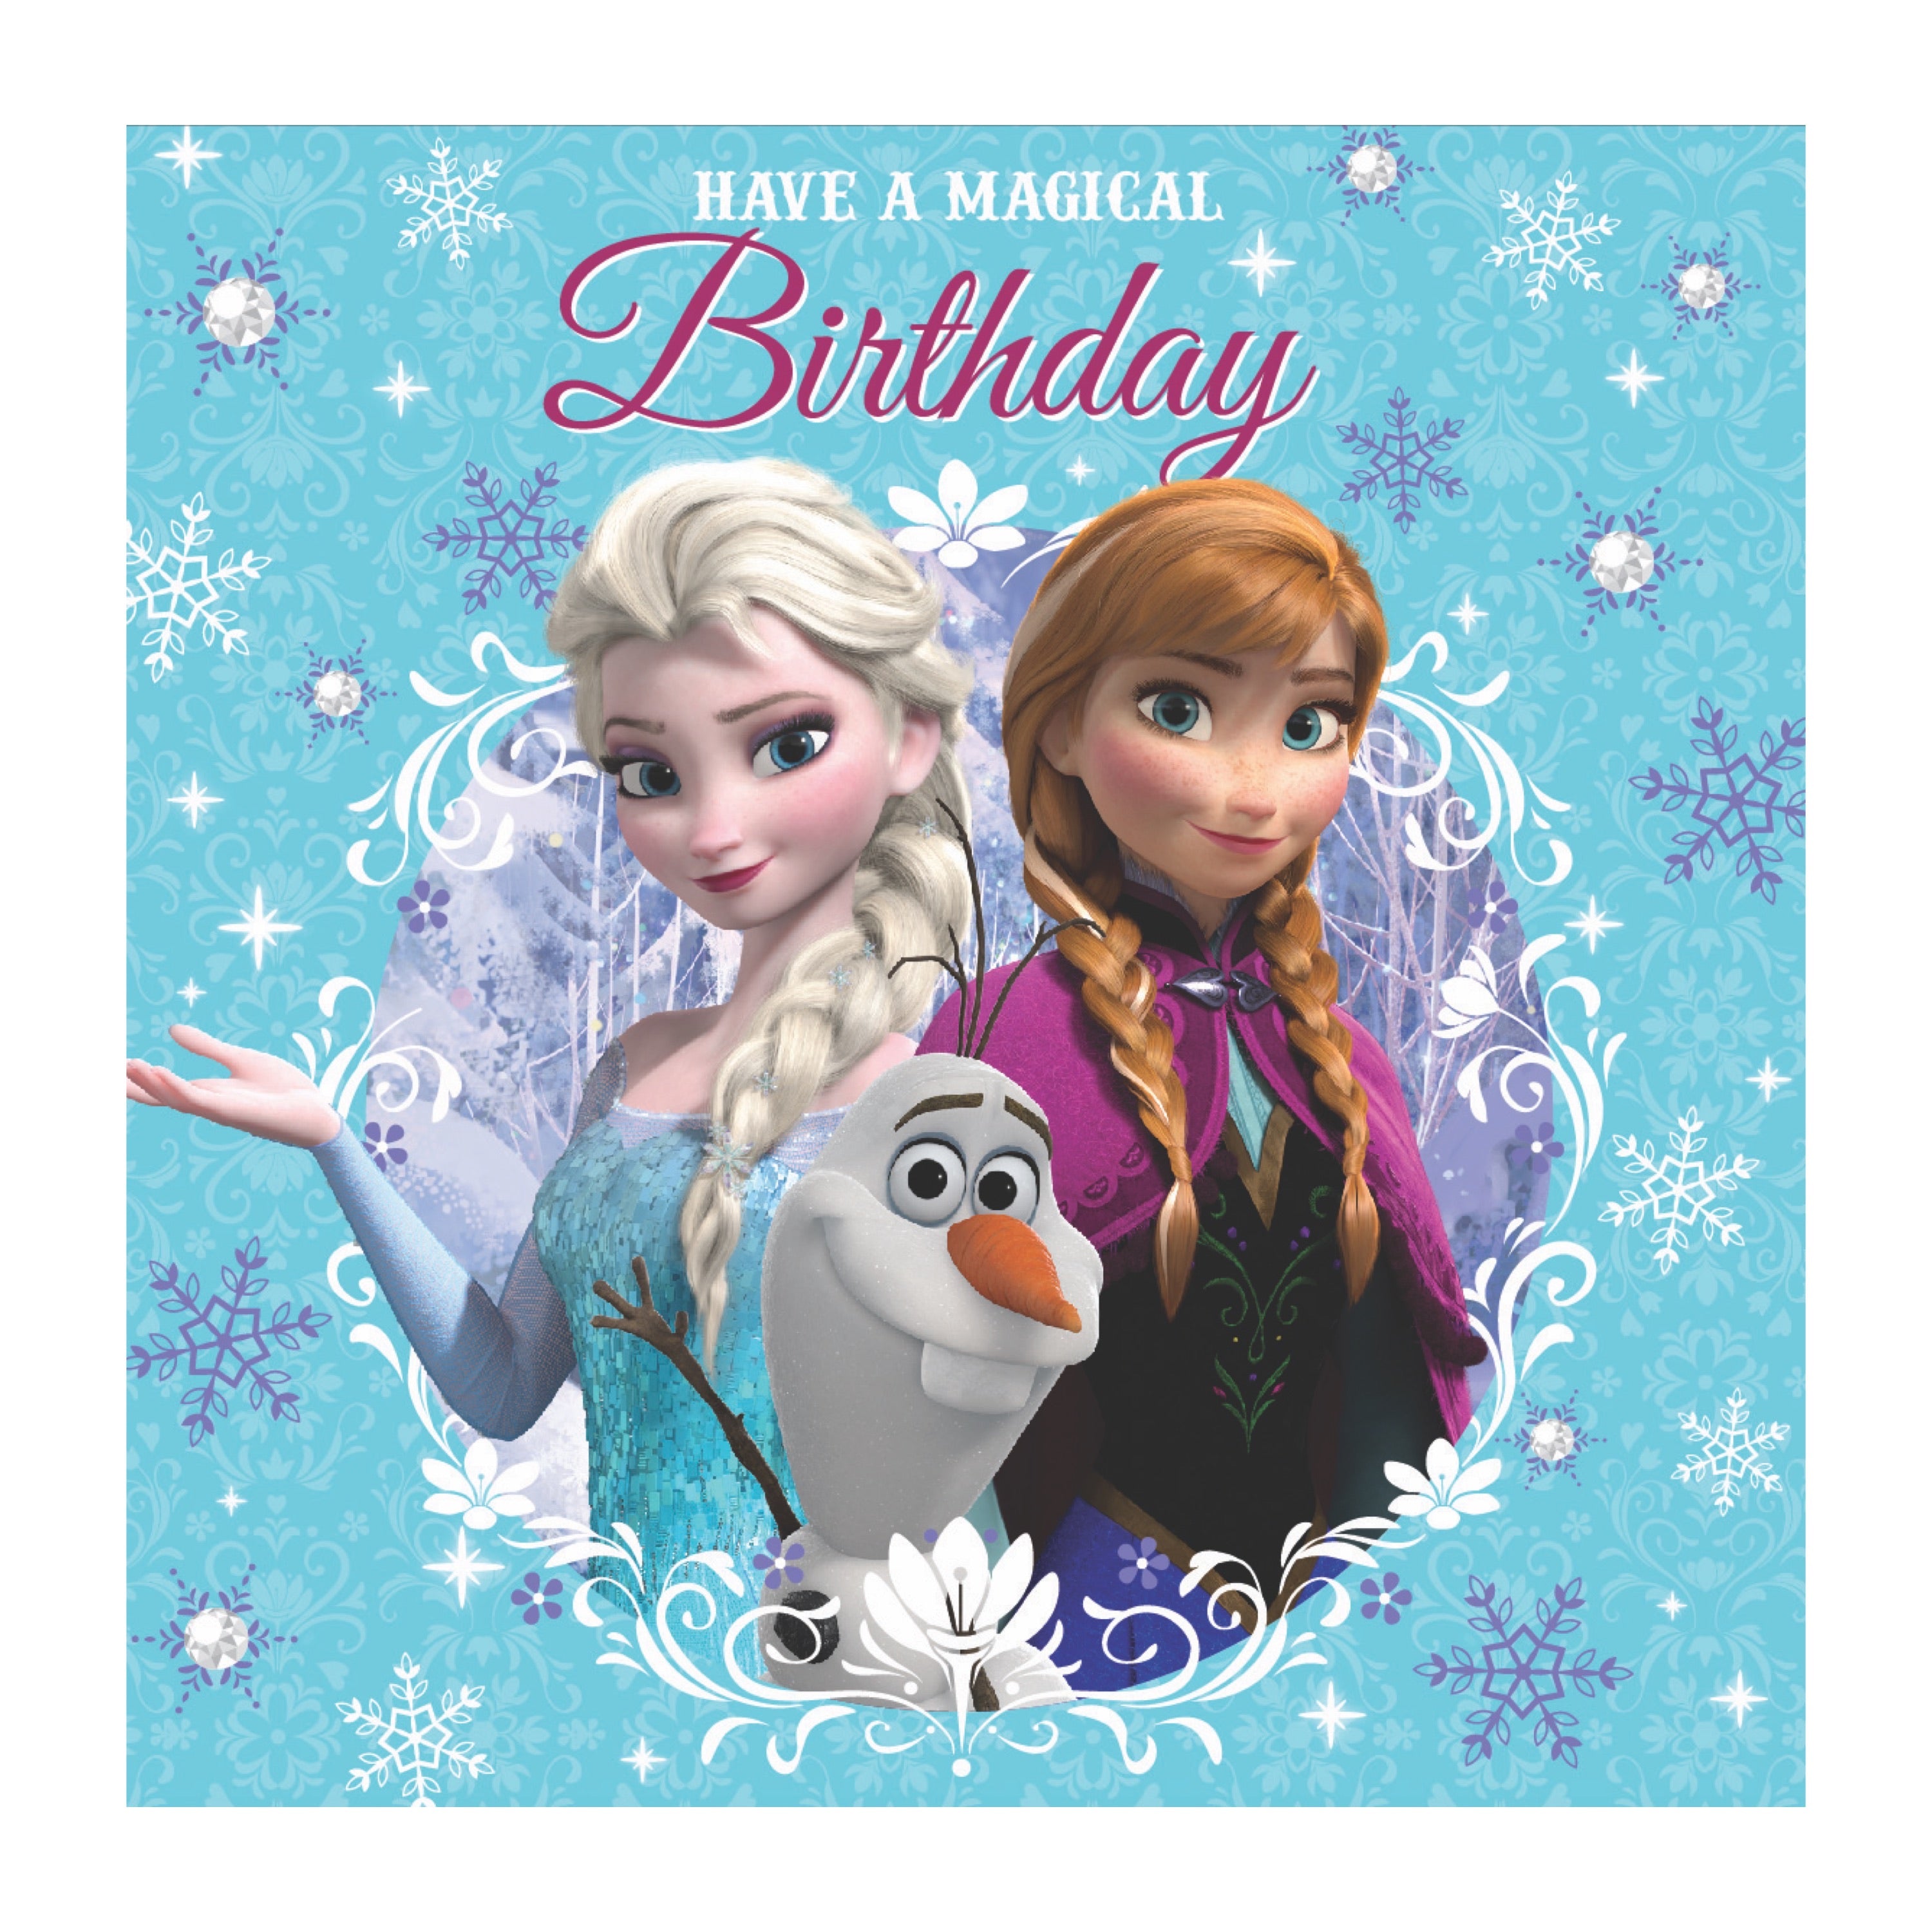 Frozen Printable Birthday Card